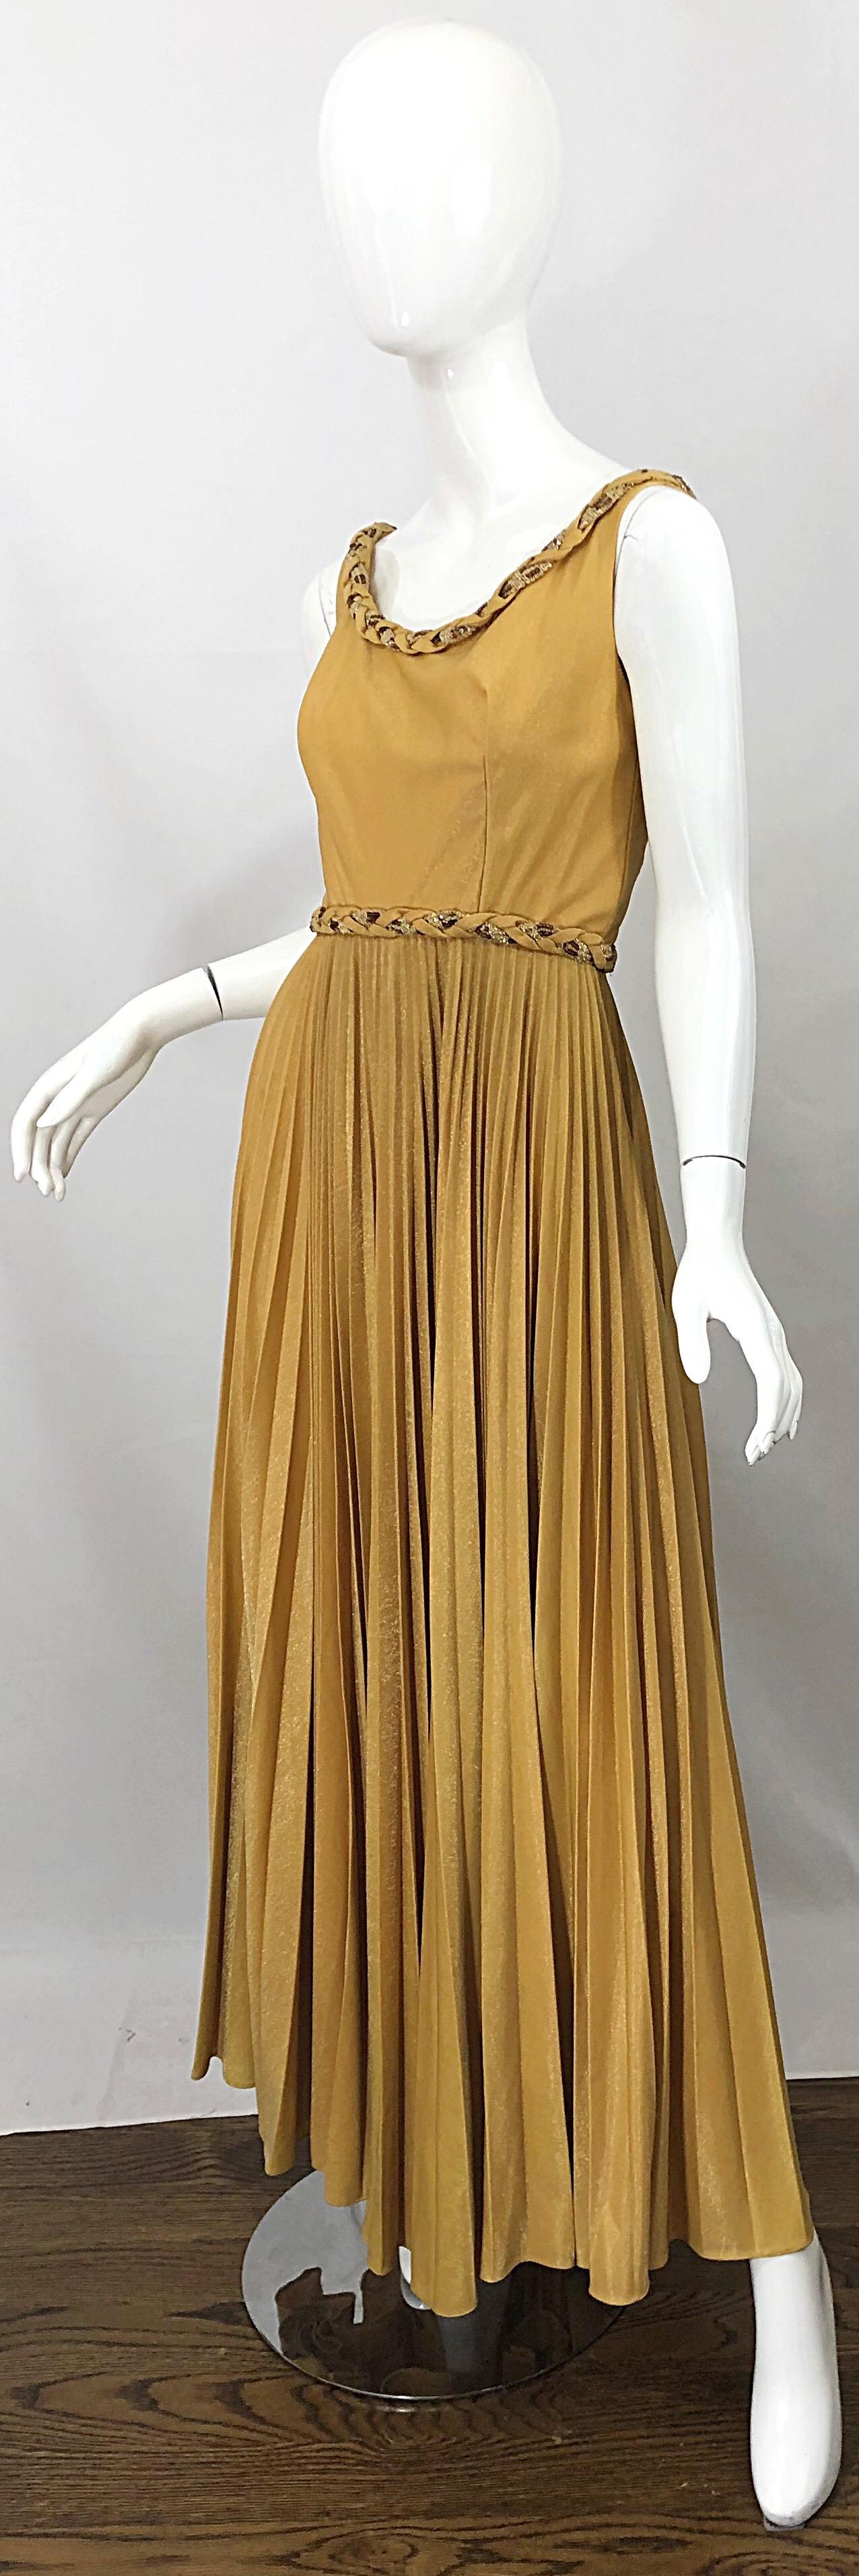 70s style sequin dress